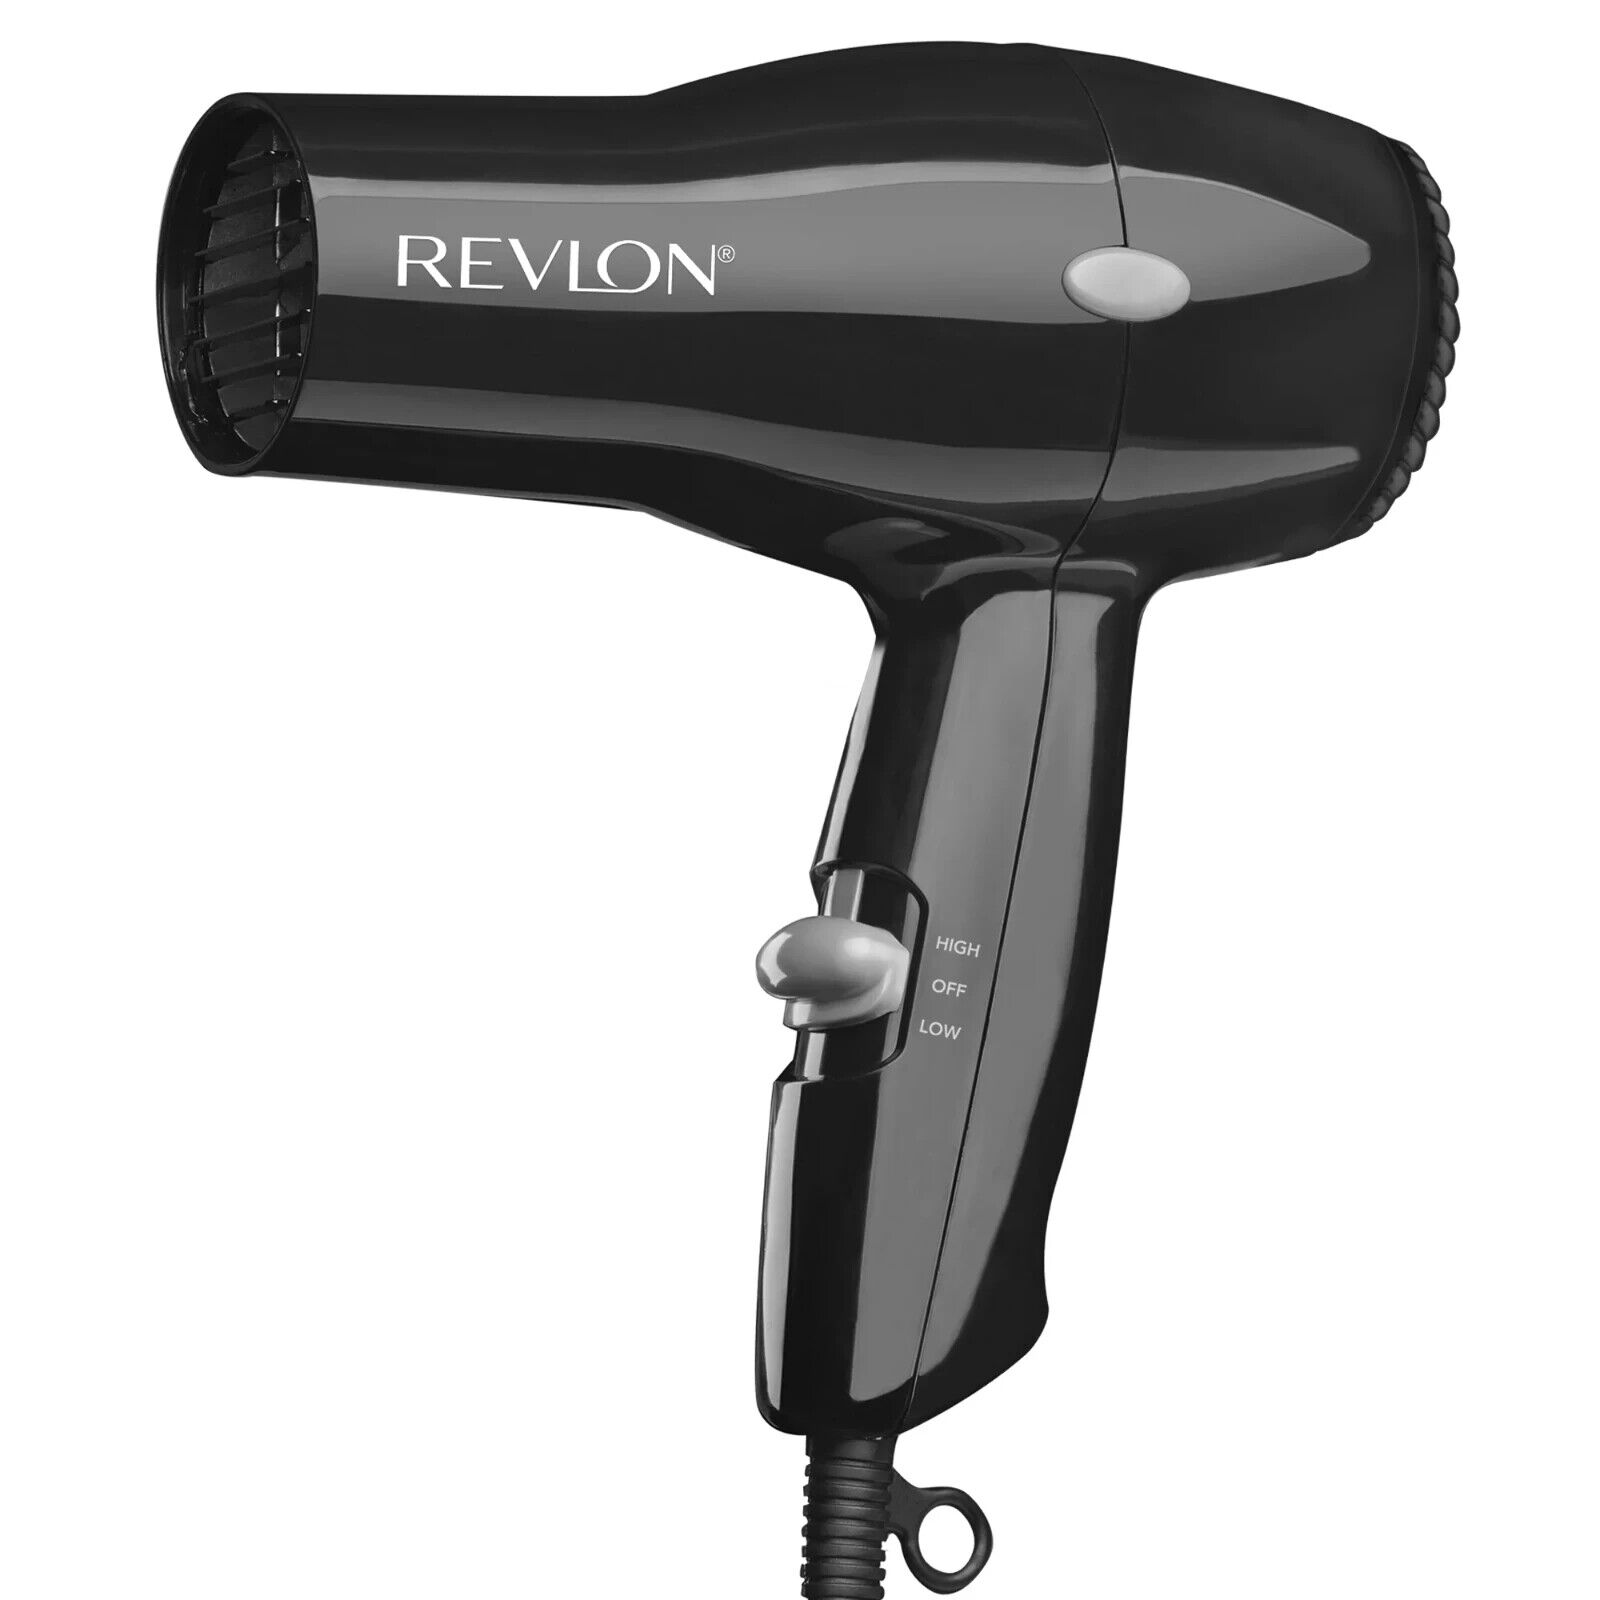 Revlon Compact Hair Dryer | 1875W Lightweight Design, Perfect for Travel, Black